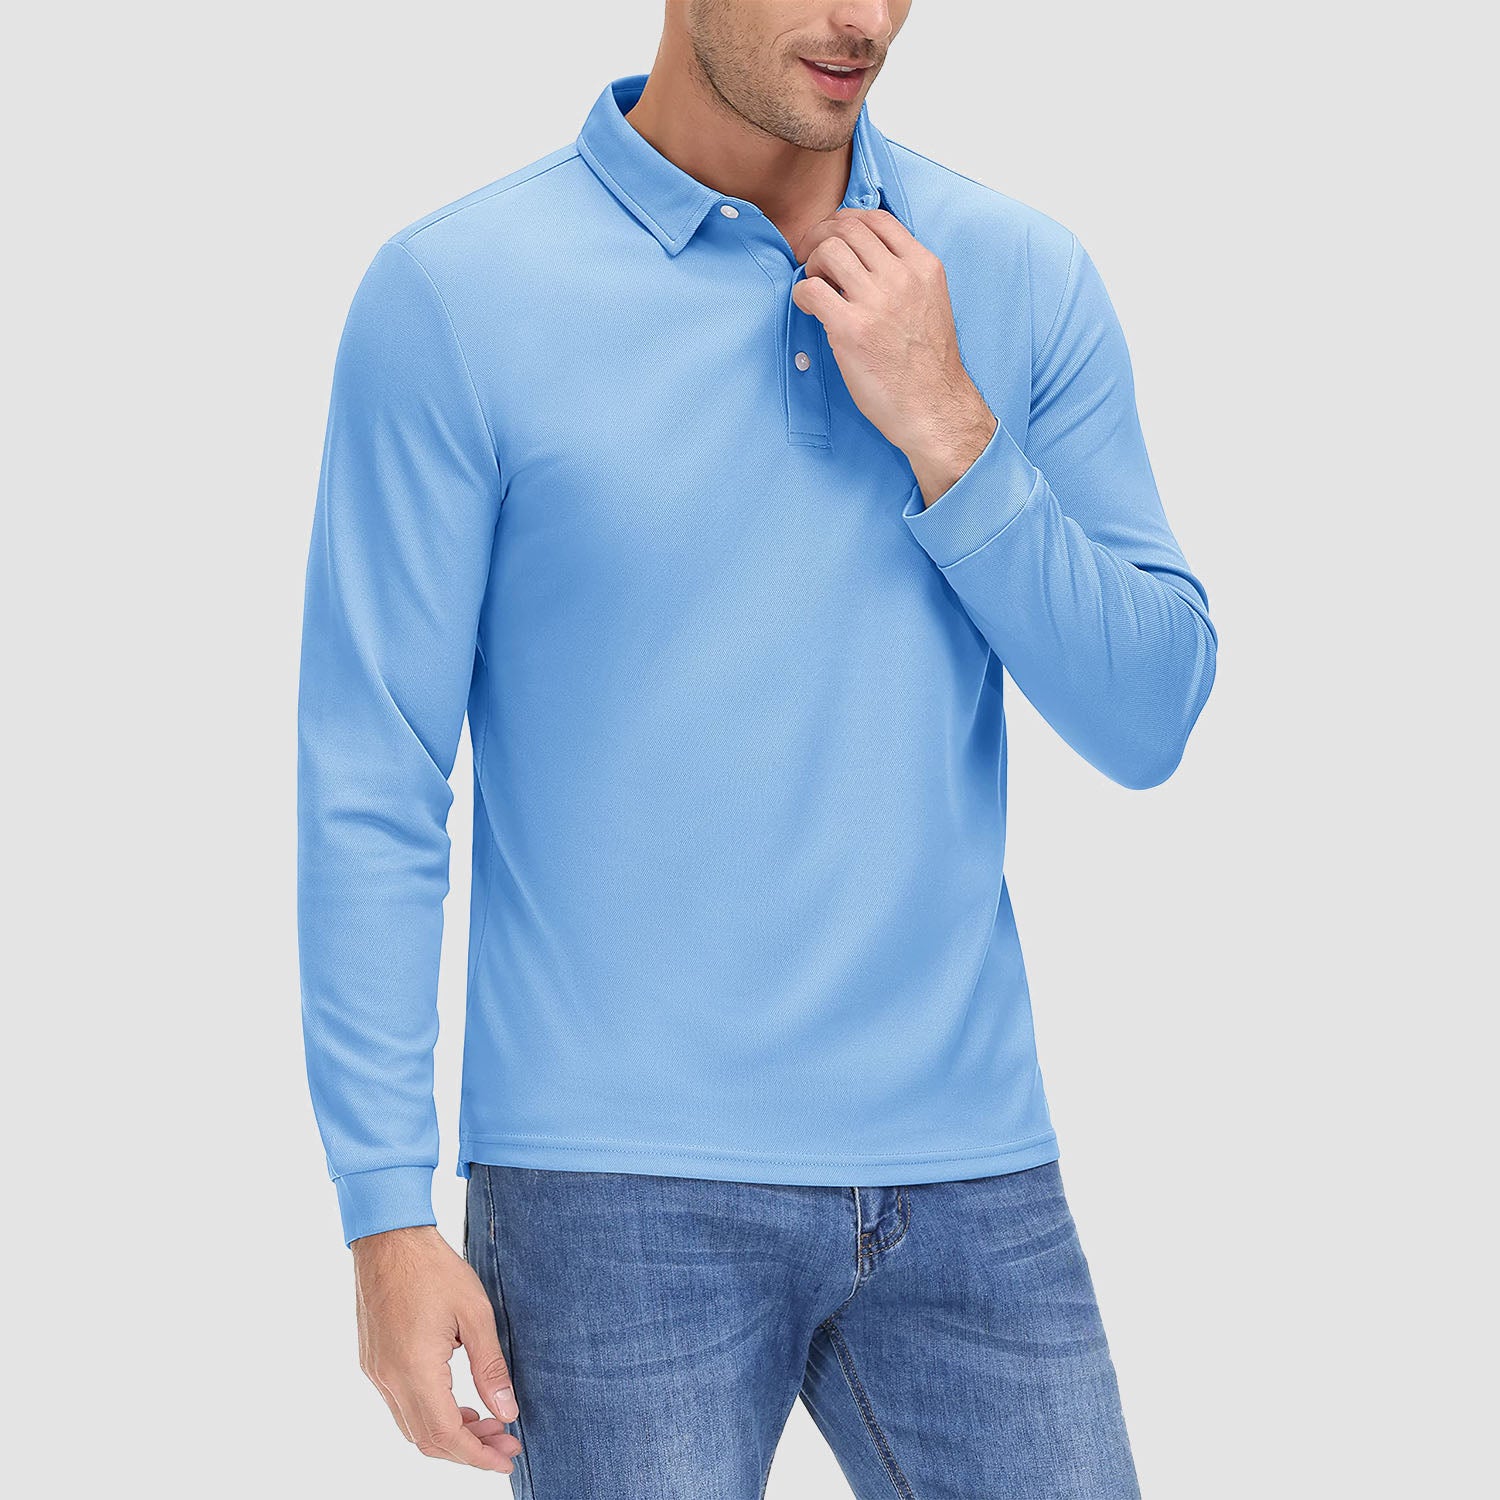 Men's Long Sleeve Polo Shirt Quick Dry Golf Tee Shirt Lightweight Performance Athletic Shirts